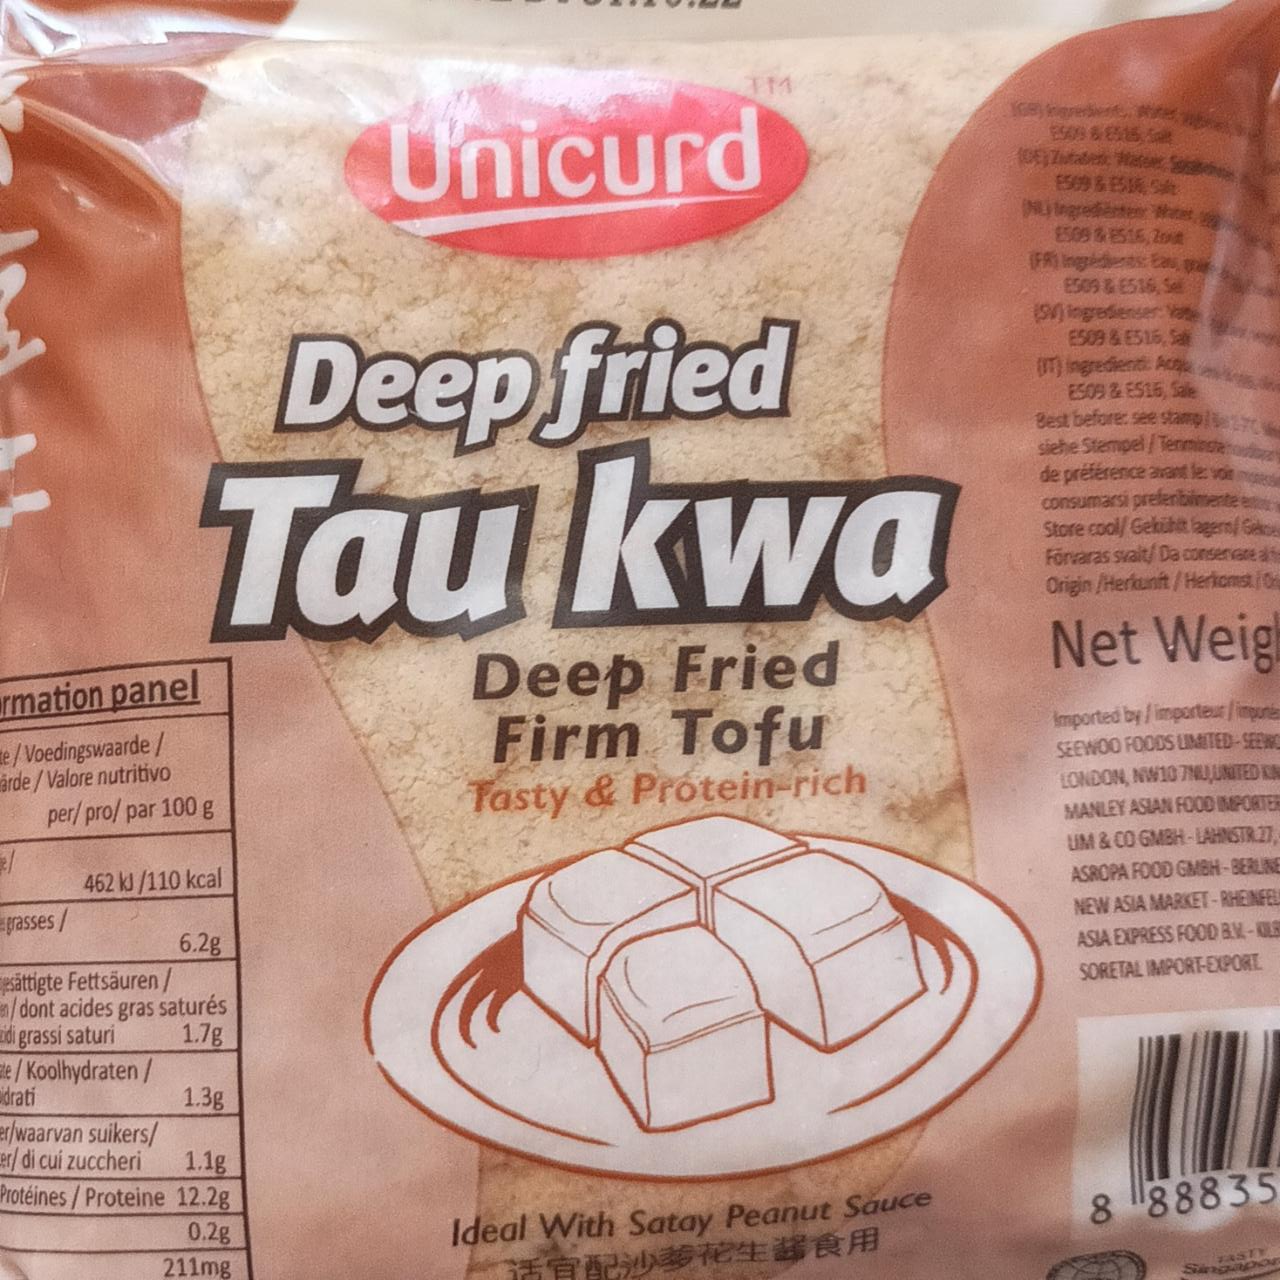 Fotografie - Deep fried Tau kwa Unicurd